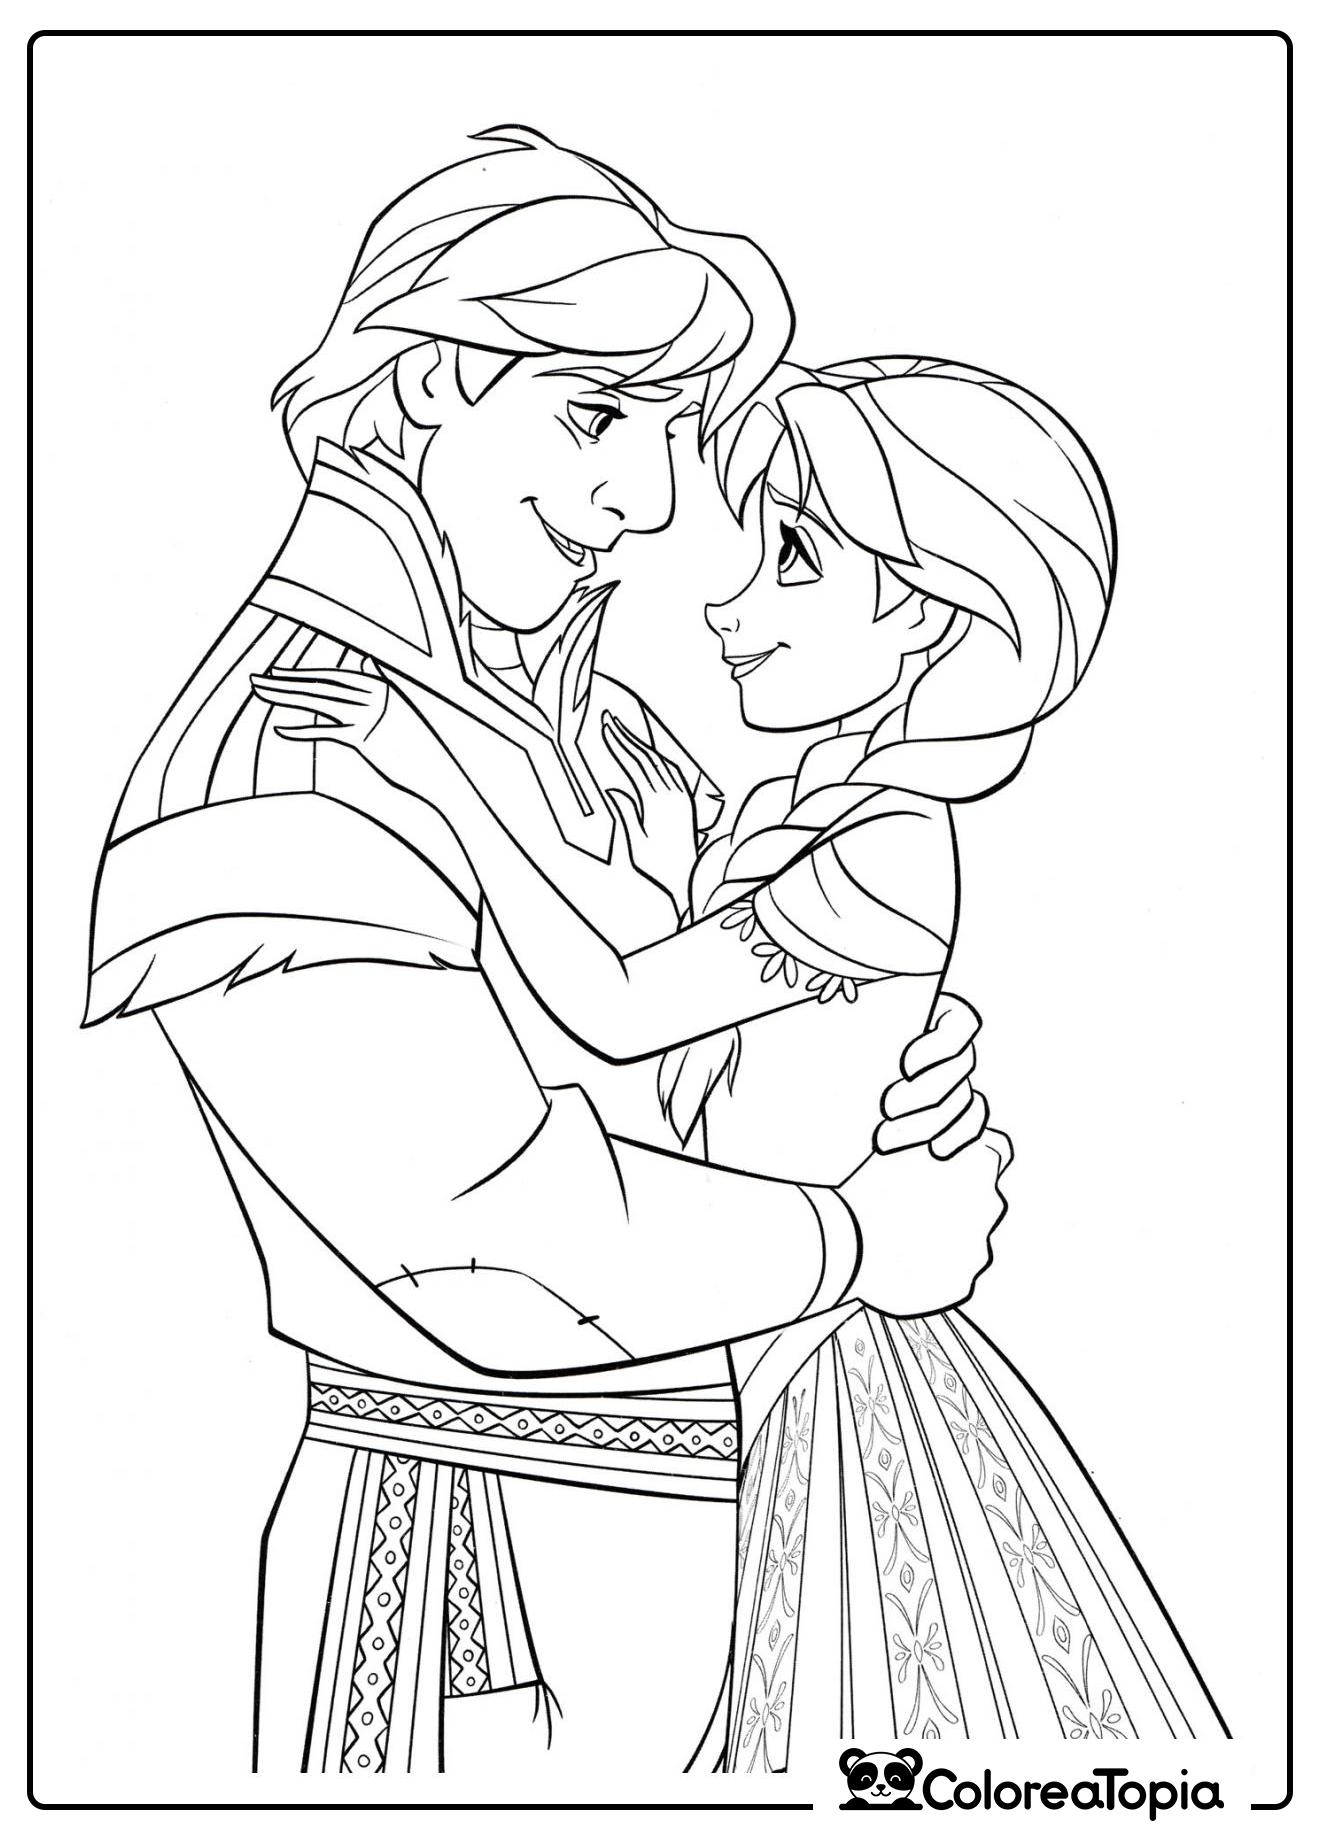 Anna y Kristoff se abrazan - dibujo para colorear